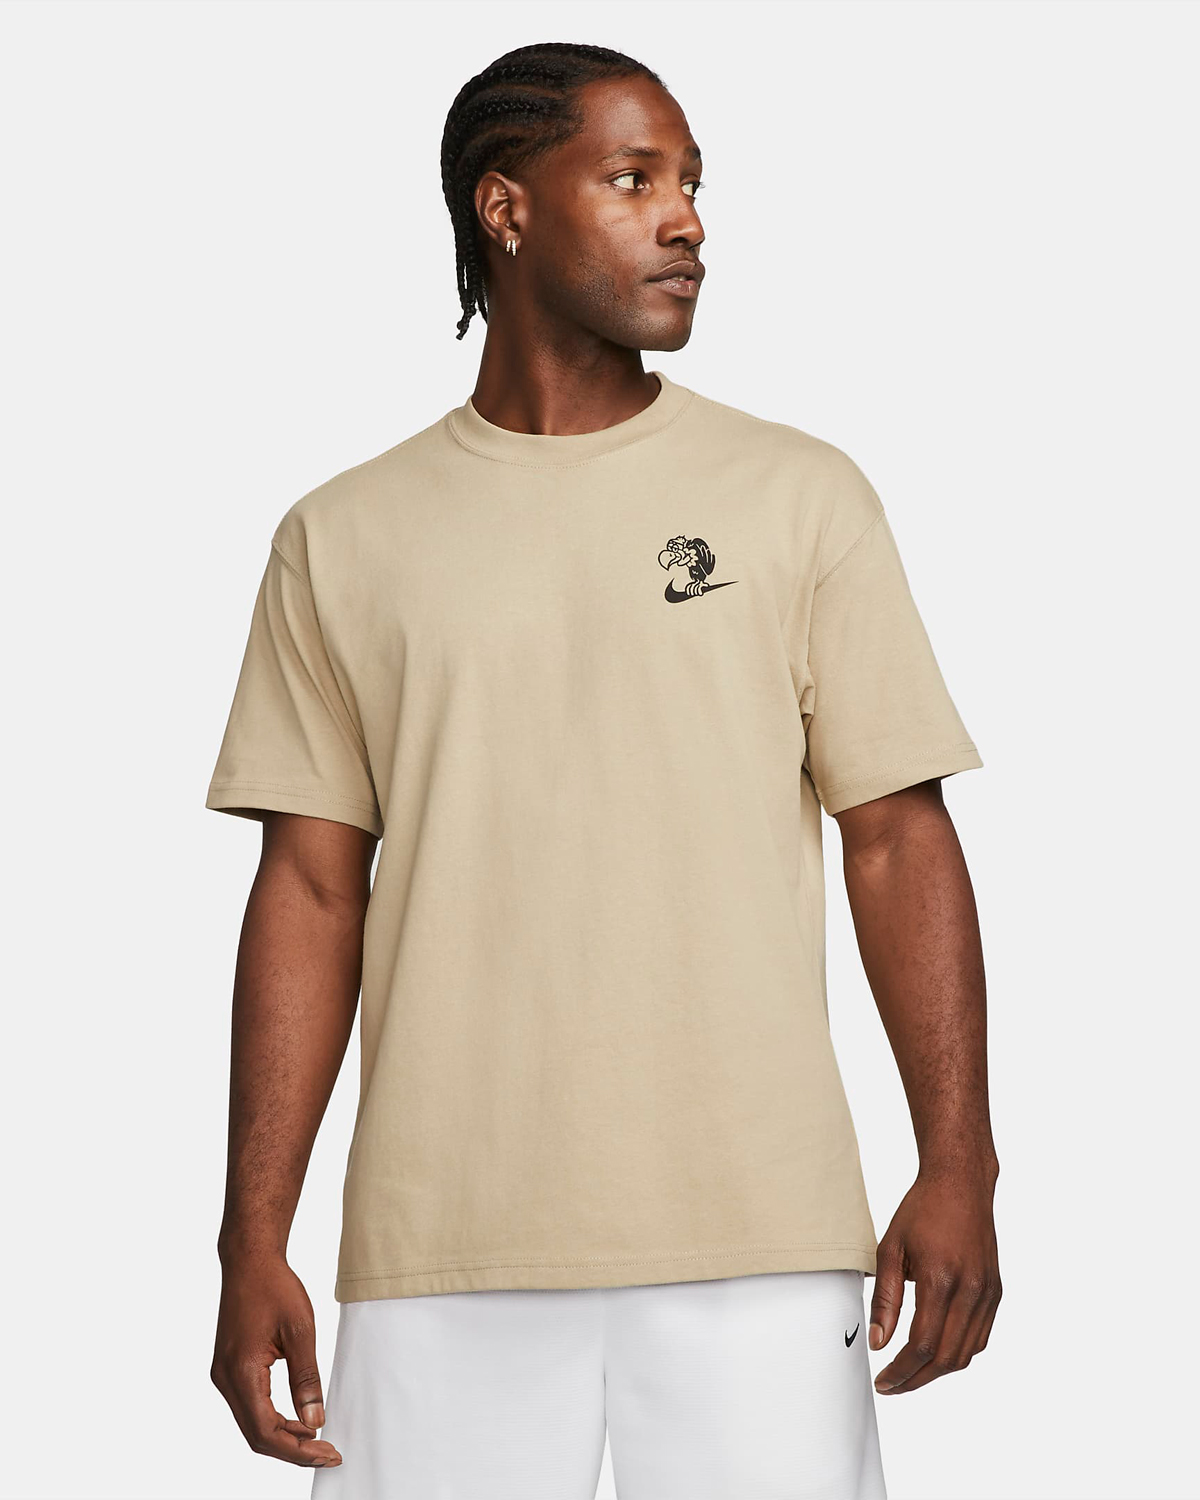 Nike-Limestone-Basketball-T-Shirt-1